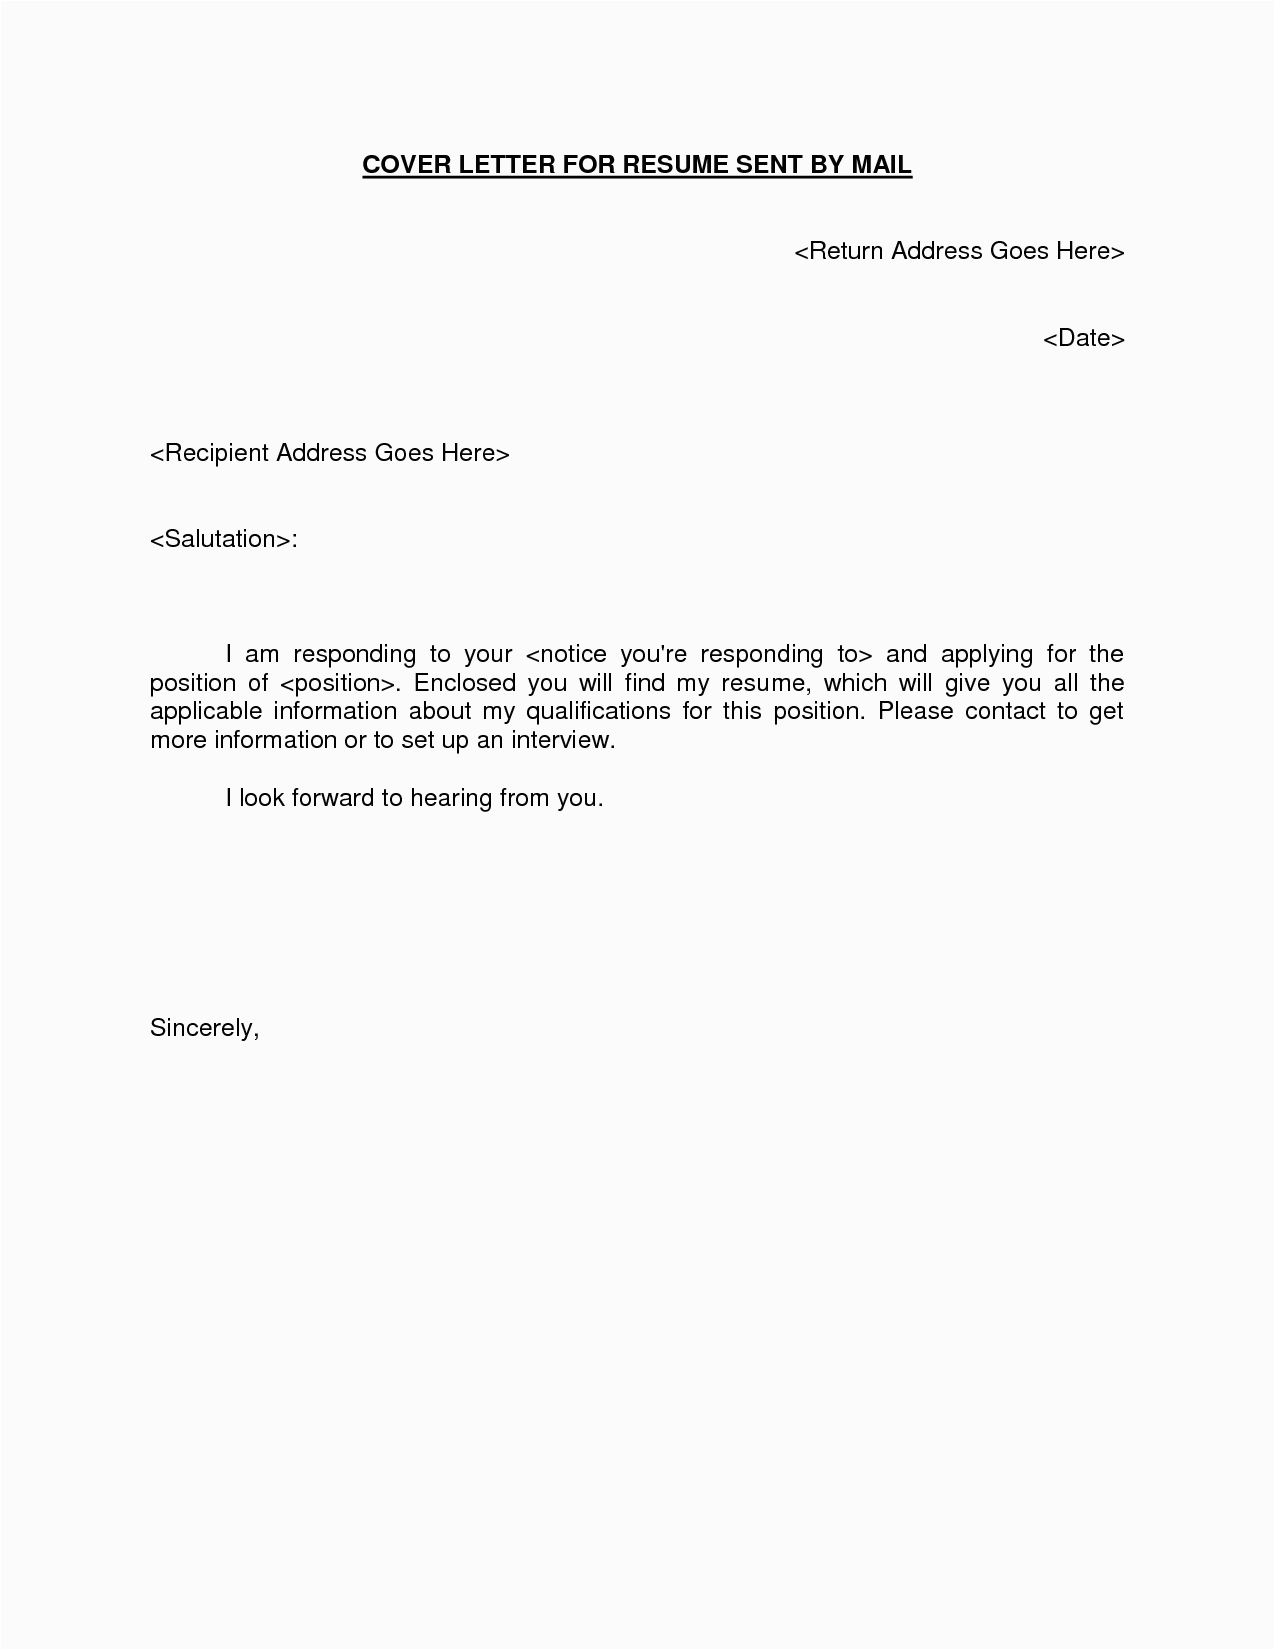 Sample Cover Letter for Sending Resume Resume and Cover Letters